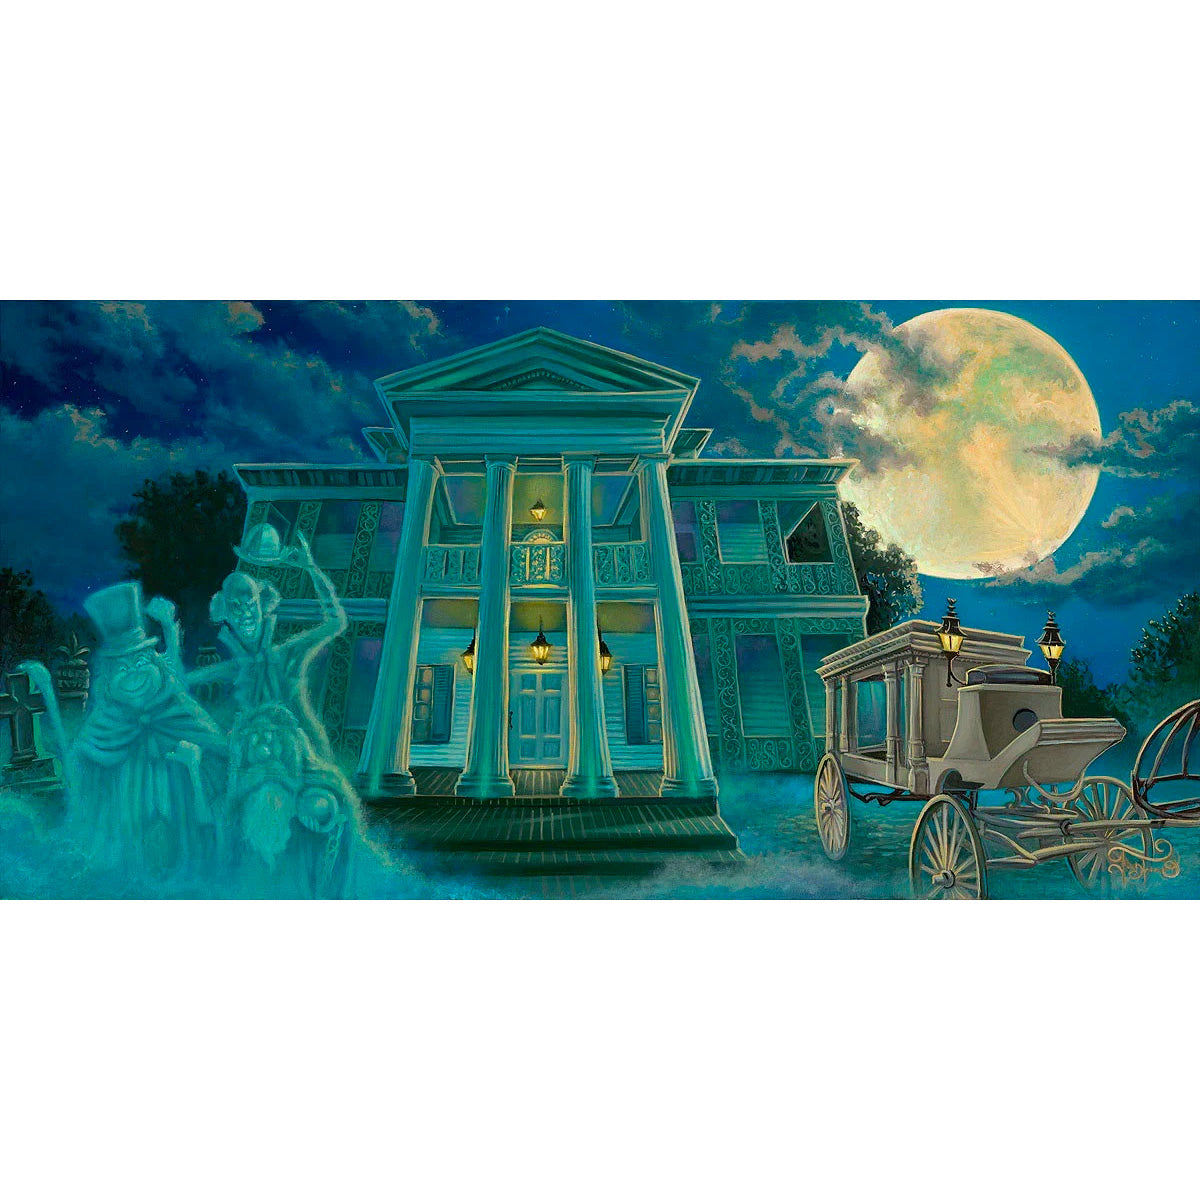 Jared Franco Disney "The Moon Climbs High" Limited Edition Canvas Giclee